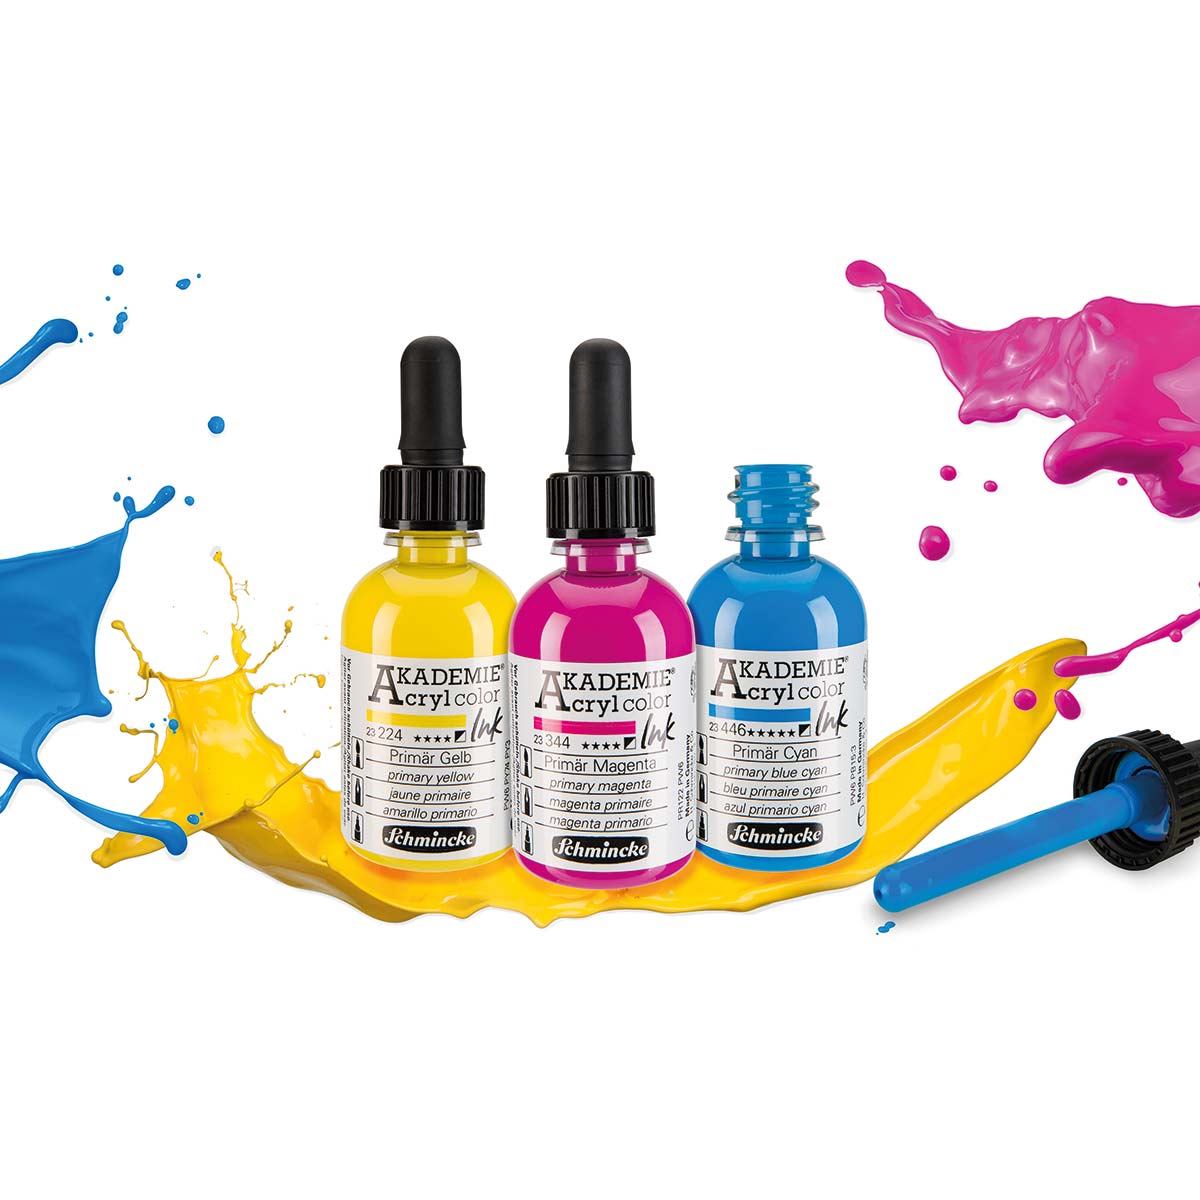 AKADEMIE Acryl color Ink – die flüssige Form der AKADEMIE Acryl color